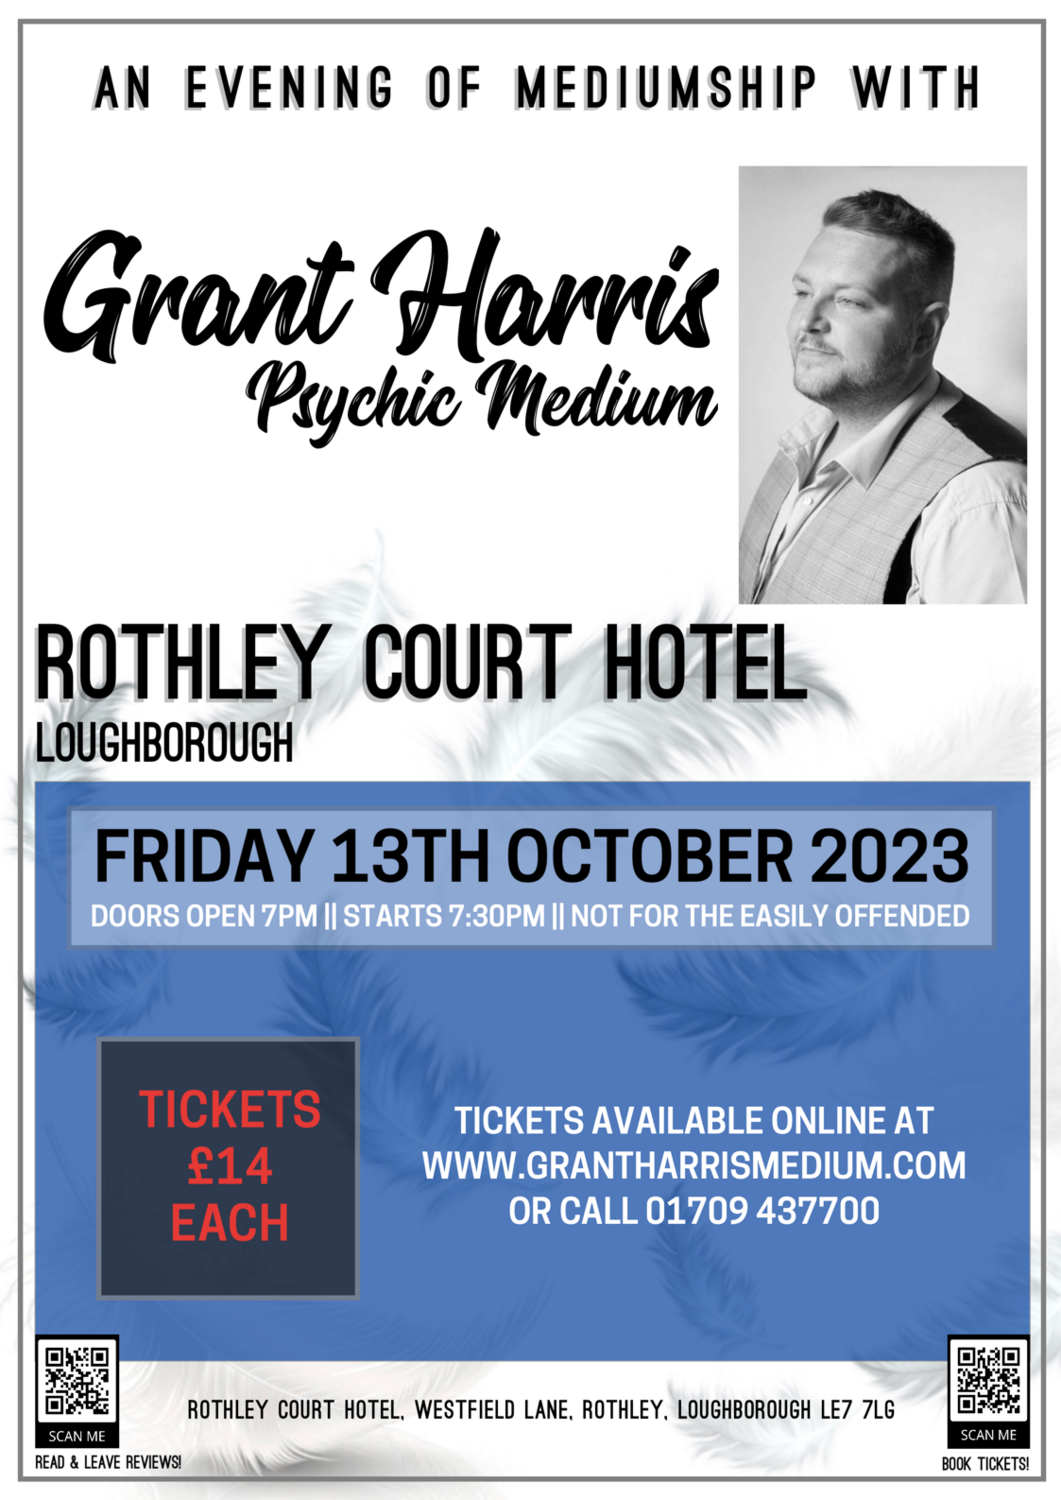 Rothley Court Hotel, Rothley Loughborough, Friday 13th October 2023